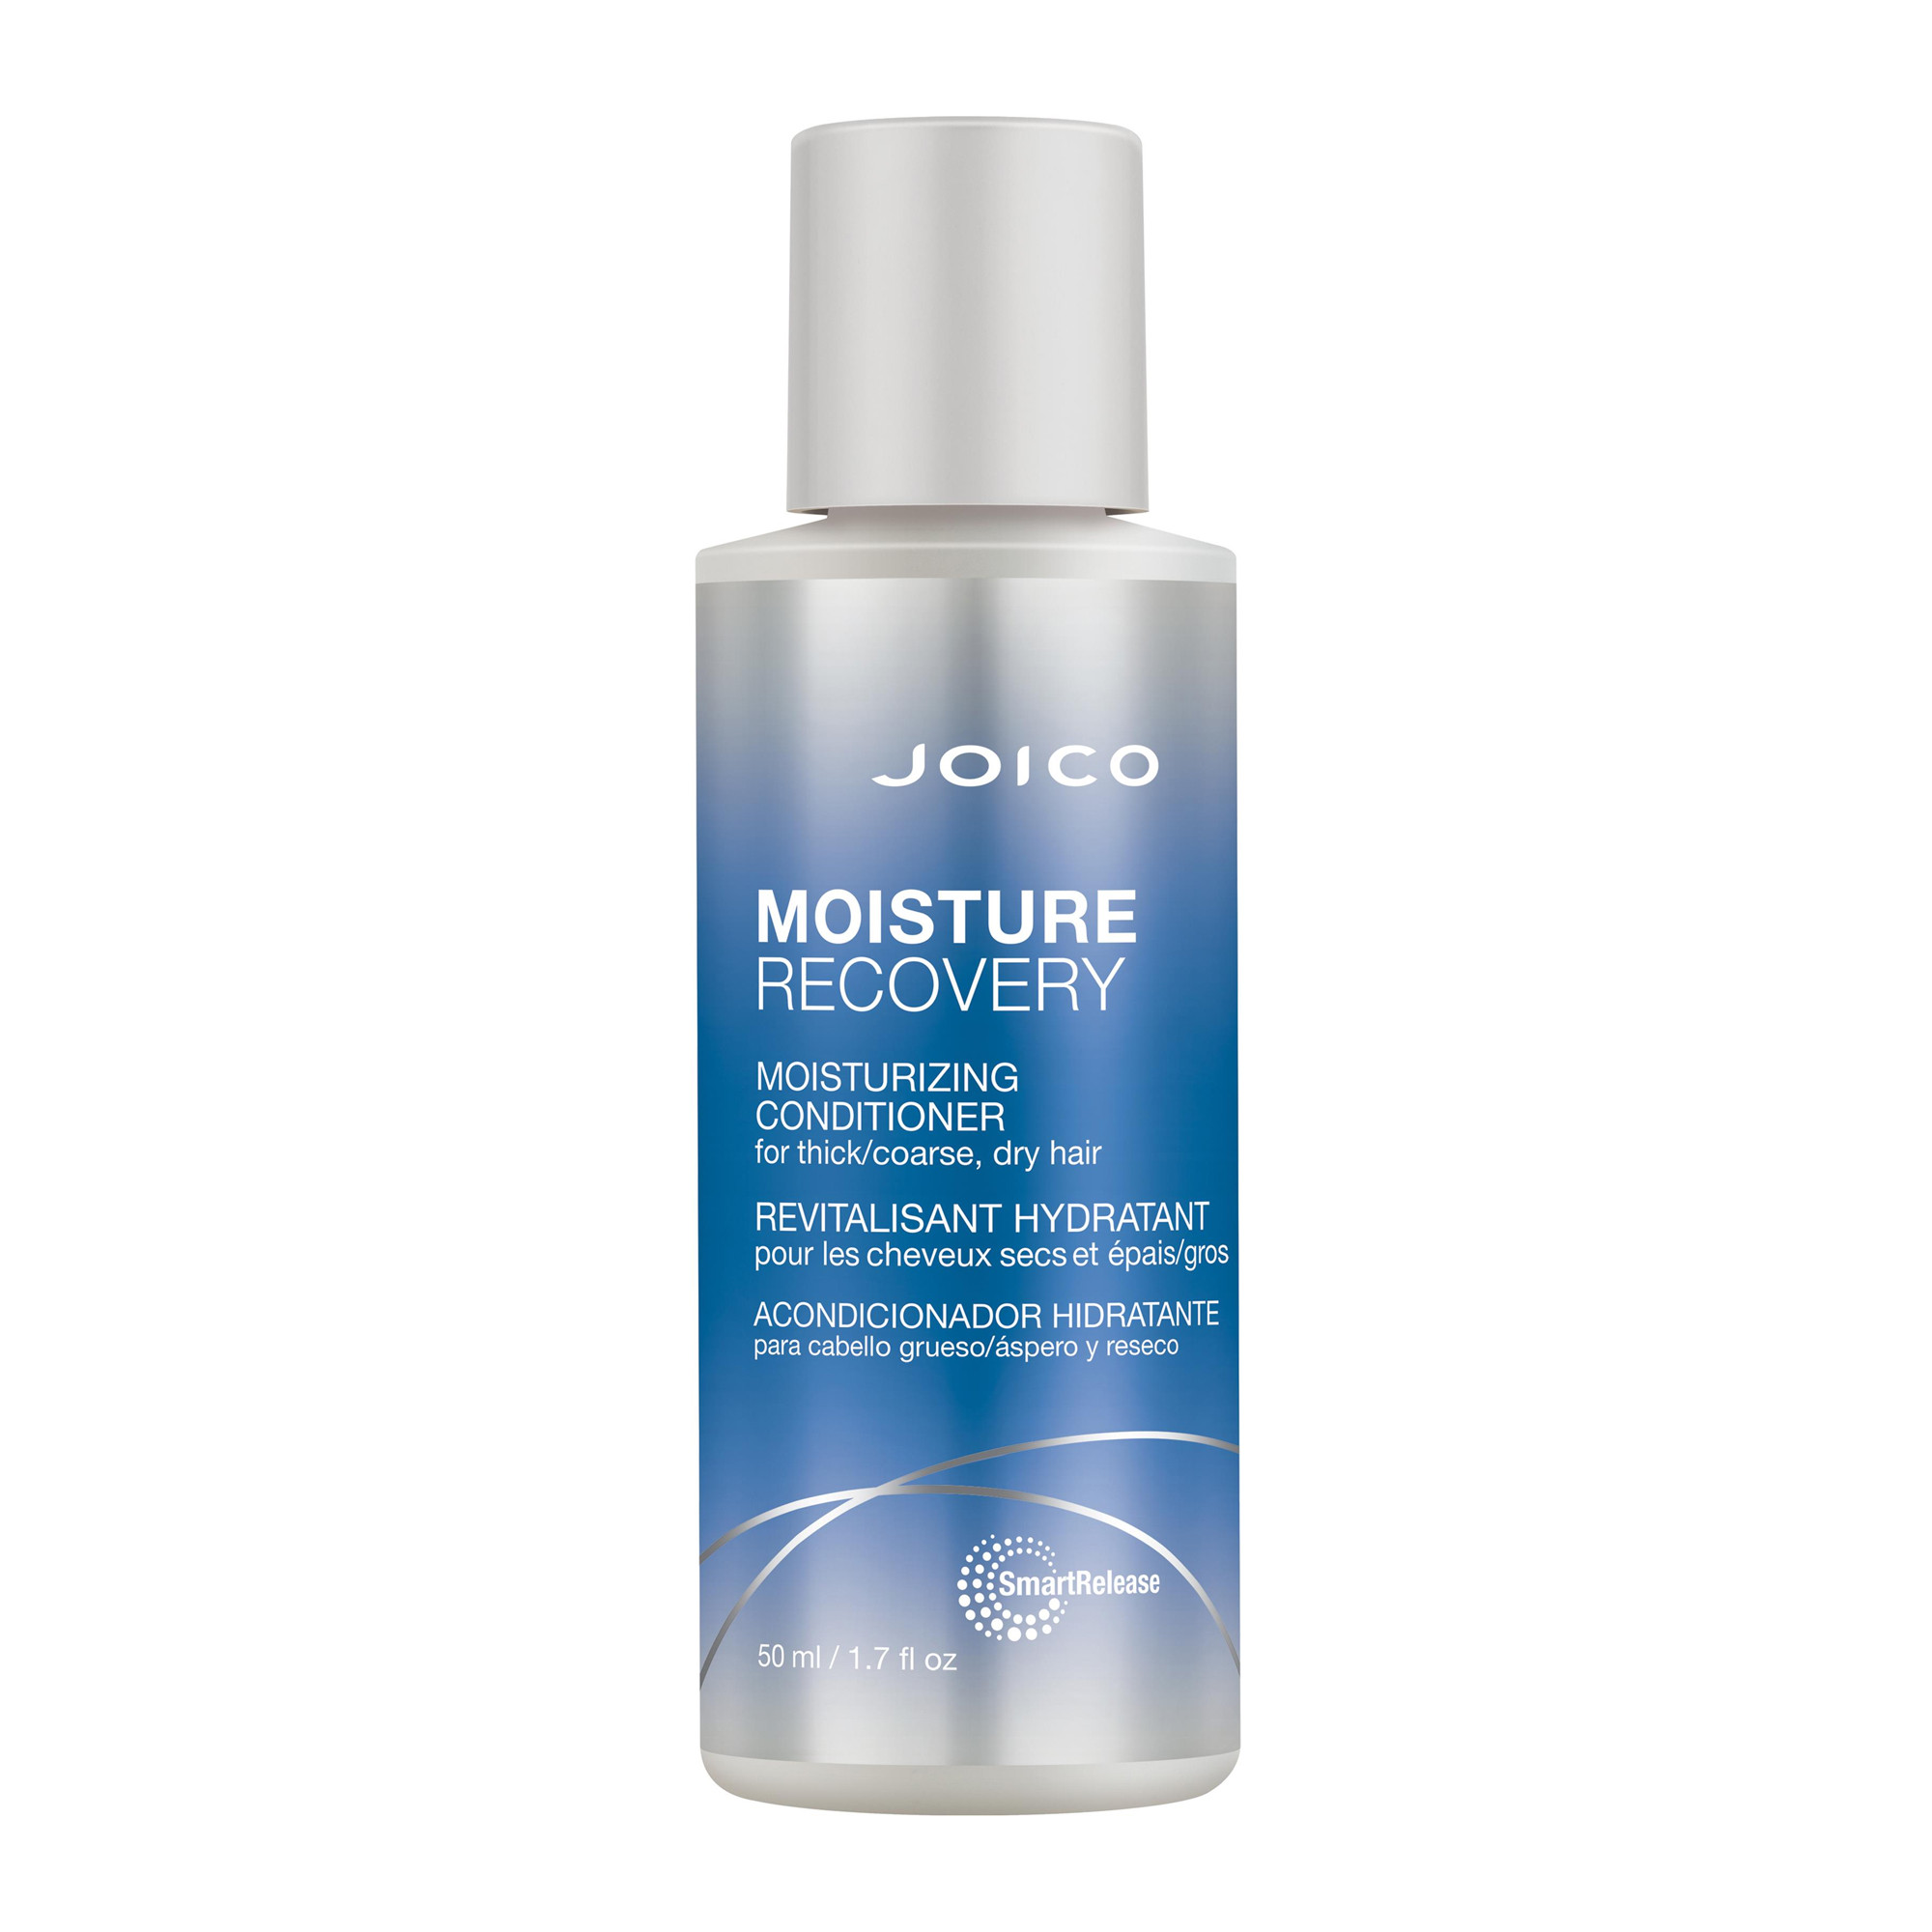 Відгуки про Joico Moisture Recovery Conditioner For Dry Hair Кондиционер для сухих волос